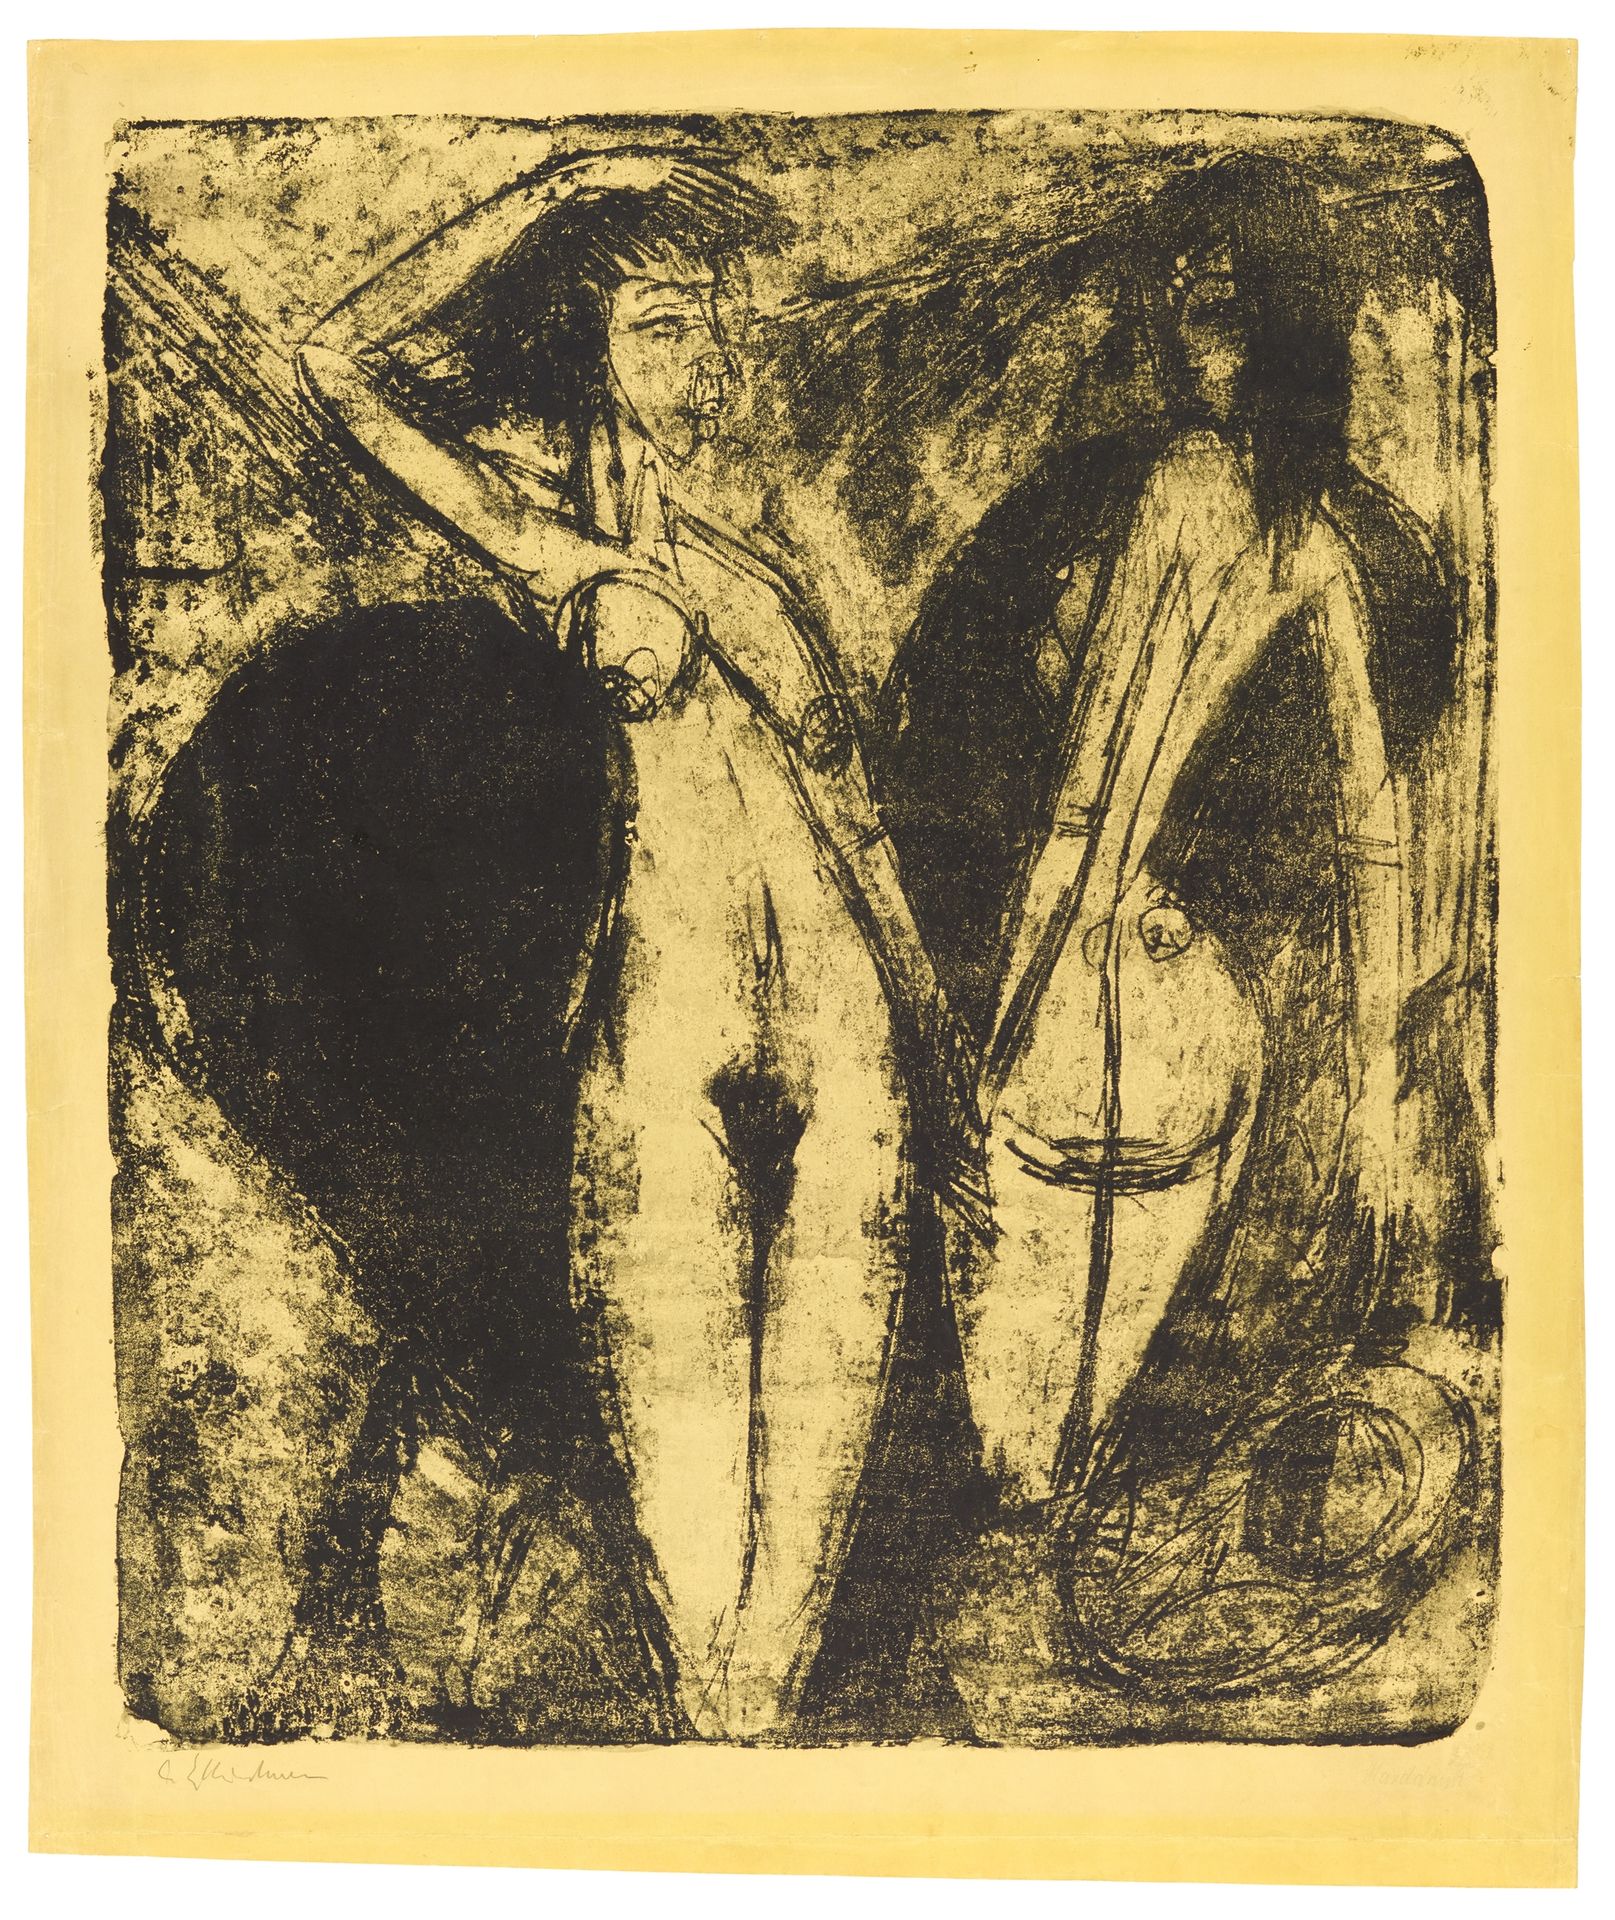 Ernst Ludwig Kirchner Ernst Ludwig Kirchner



Nus dansants

1914



Lithographi&hellip;